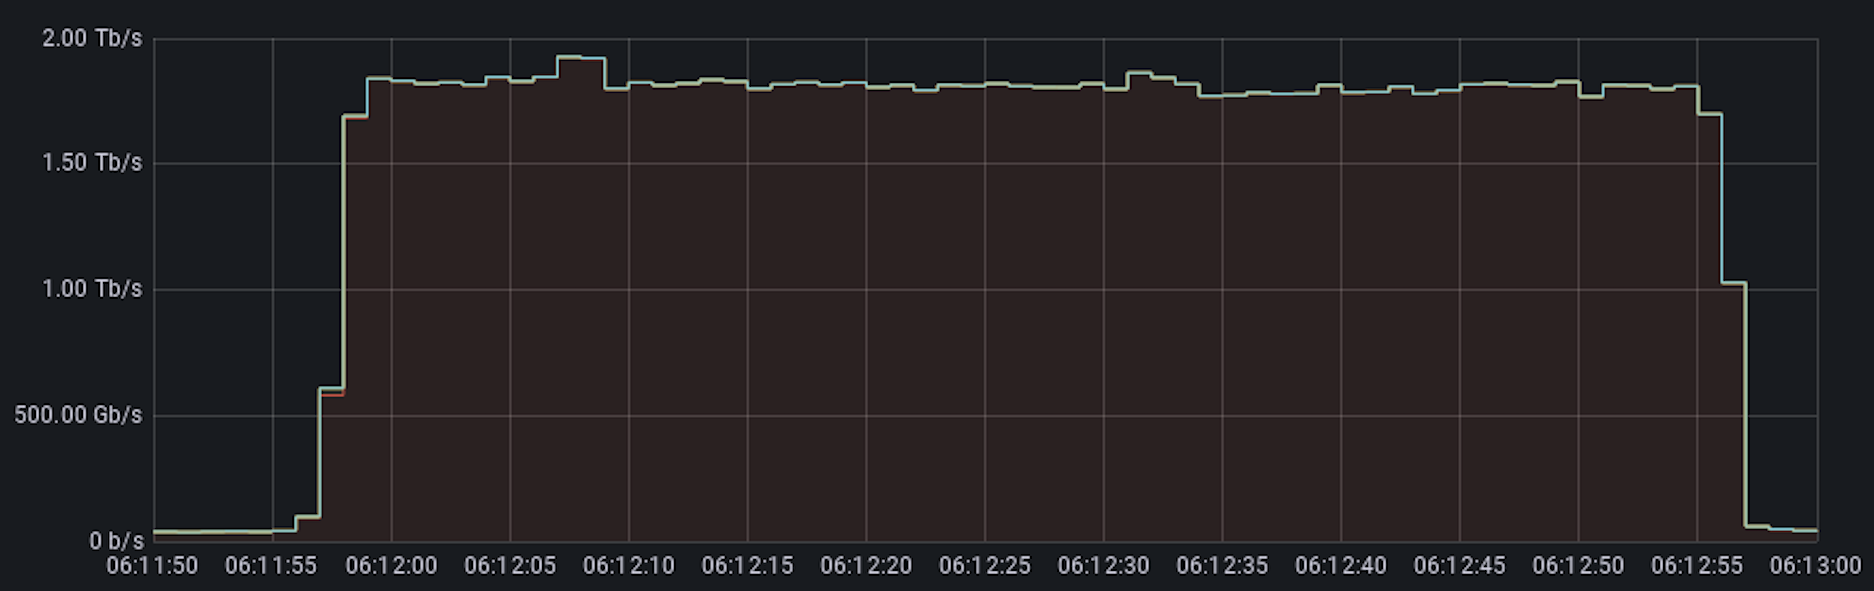 Cloudflare блокировала DDoS-атаку, достигшую почти 2 Тб/с